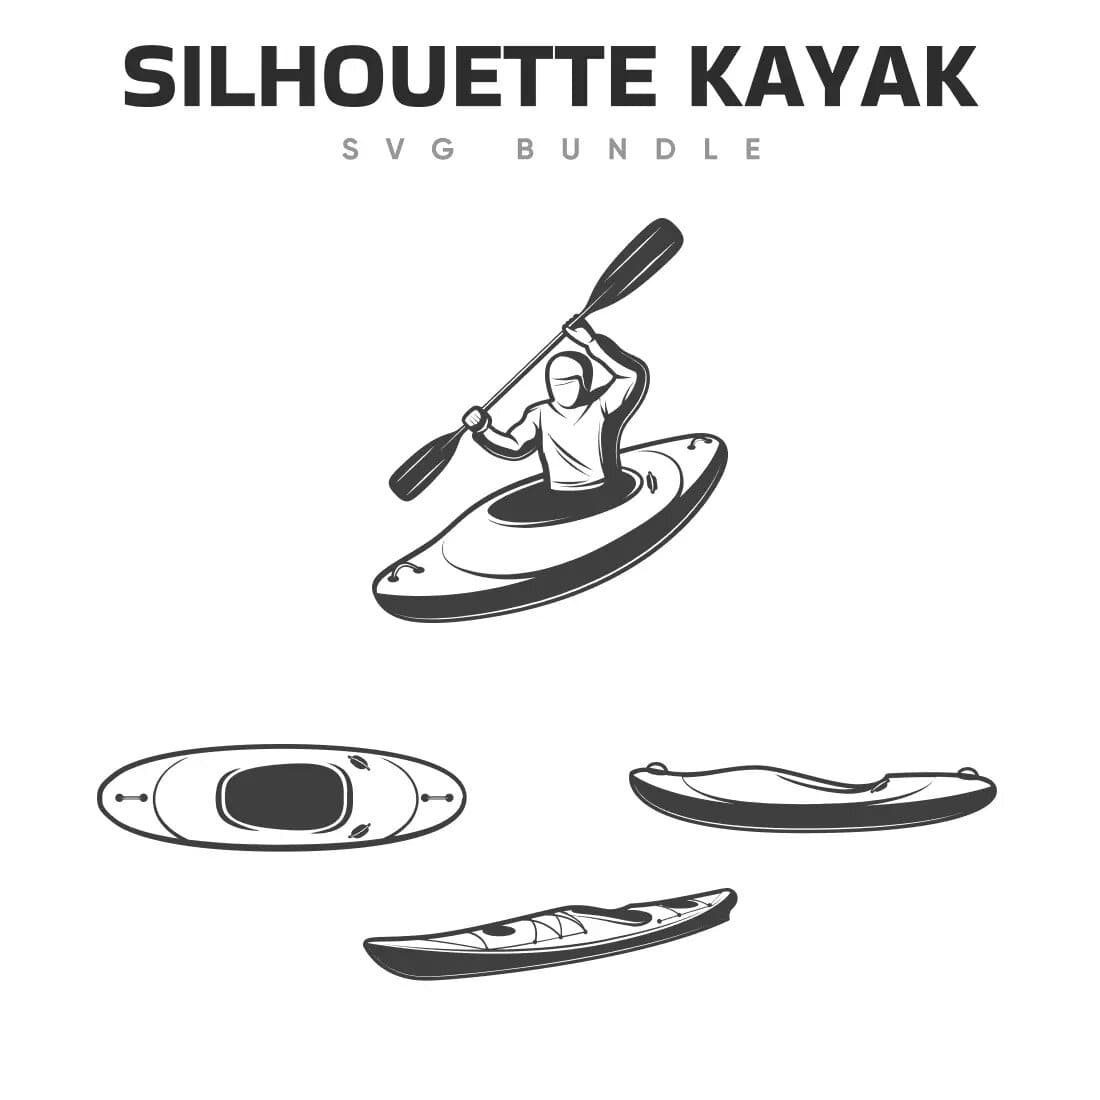 Silhouette Kayak SVG Bundle Preview 9.